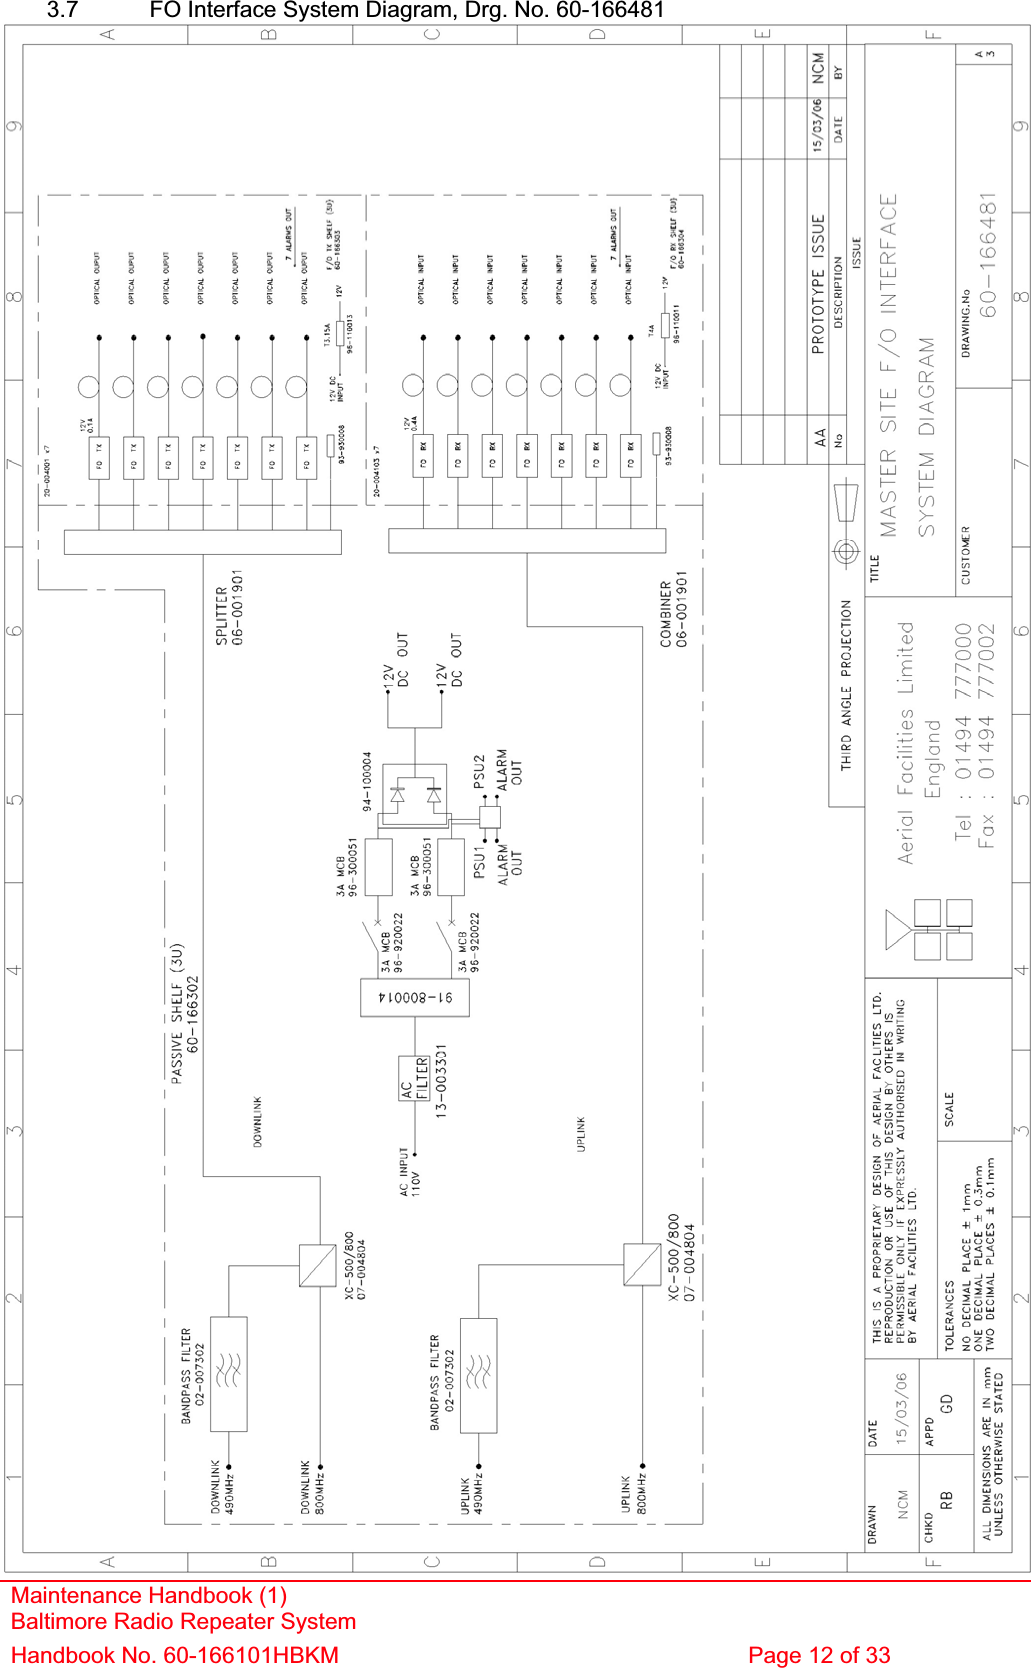 3.7  FO Interface System Diagram, Drg. No. 60-166481 Maintenance Handbook (1) Baltimore Radio Repeater System Handbook No. 60-166101HBKM  Page 12 of 33 